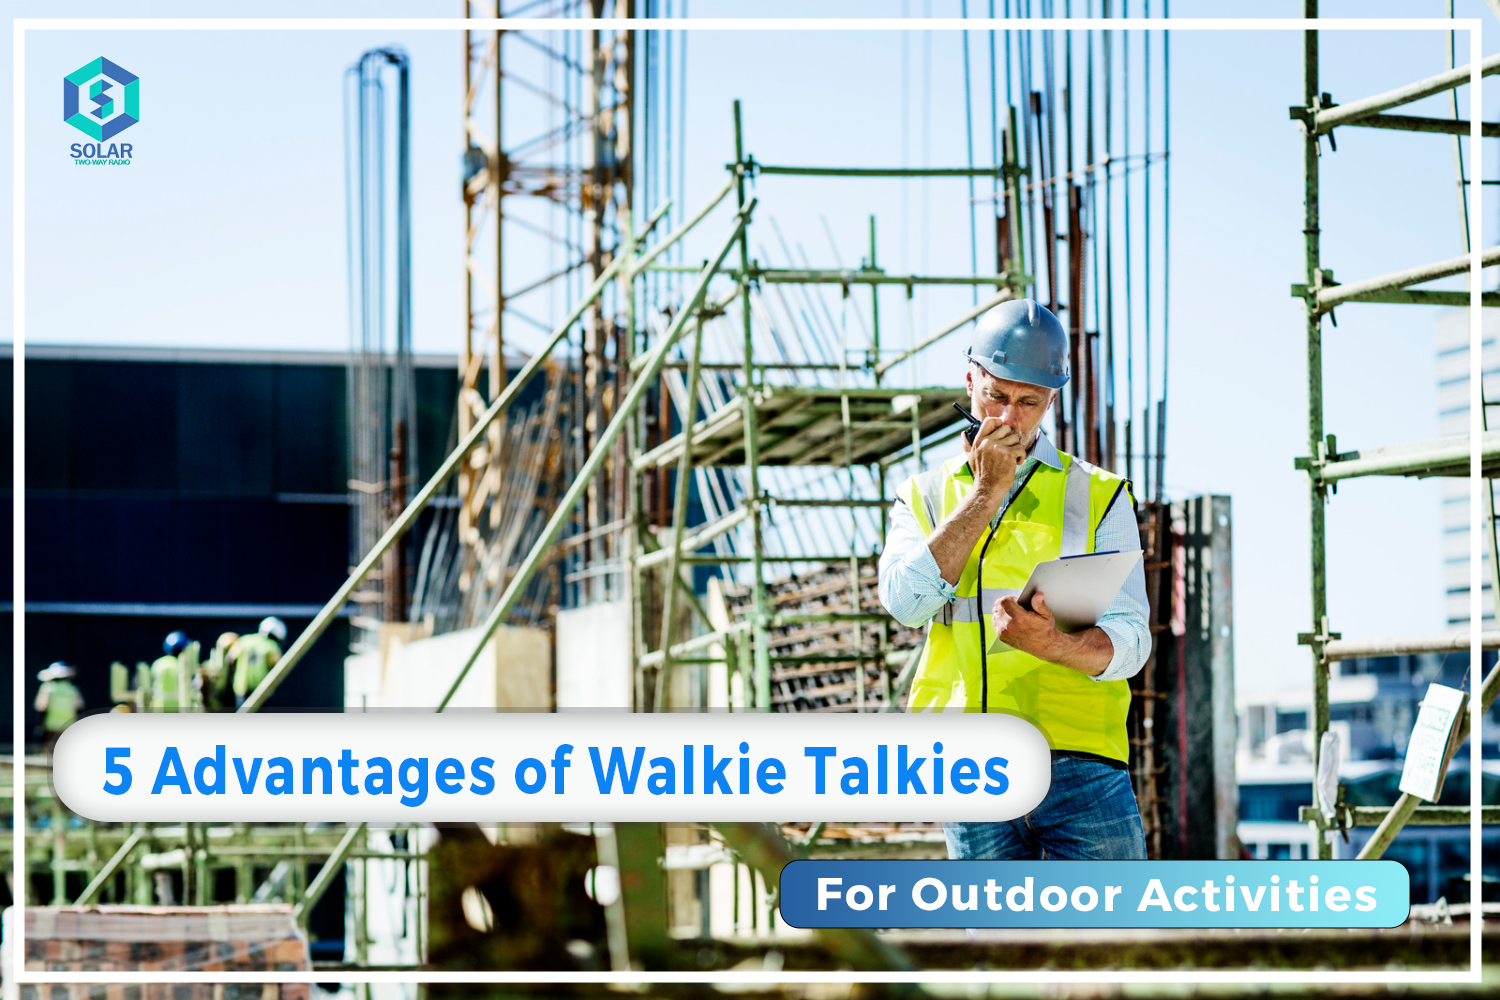 5 Advantages of Walkie Talkies for Outdoor Activities